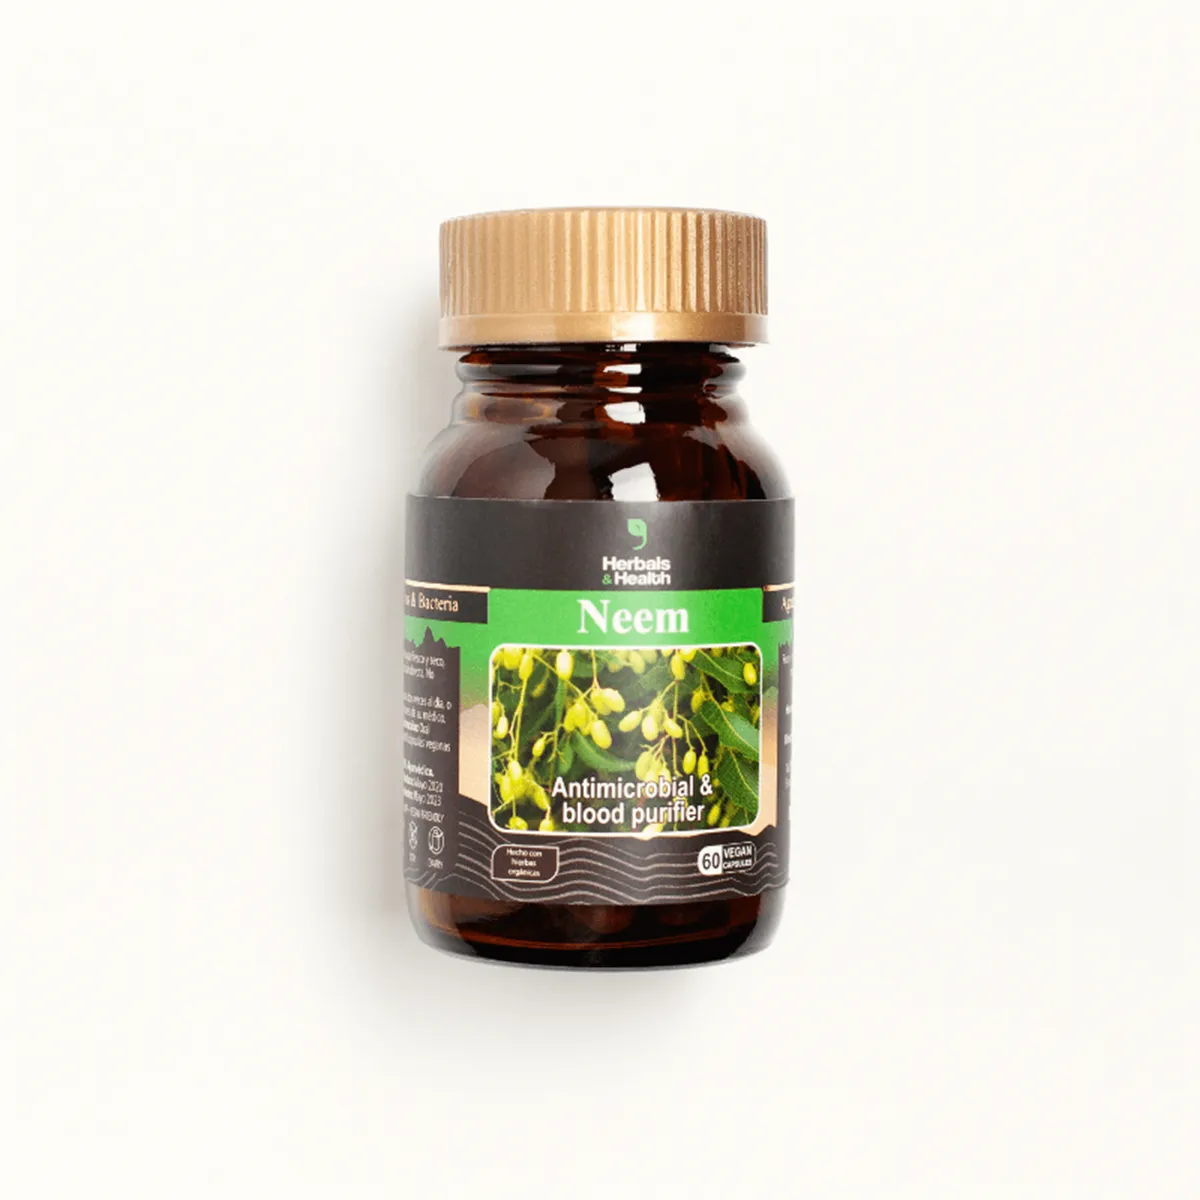 Capsulas de Neem 60cap Herbals&Health